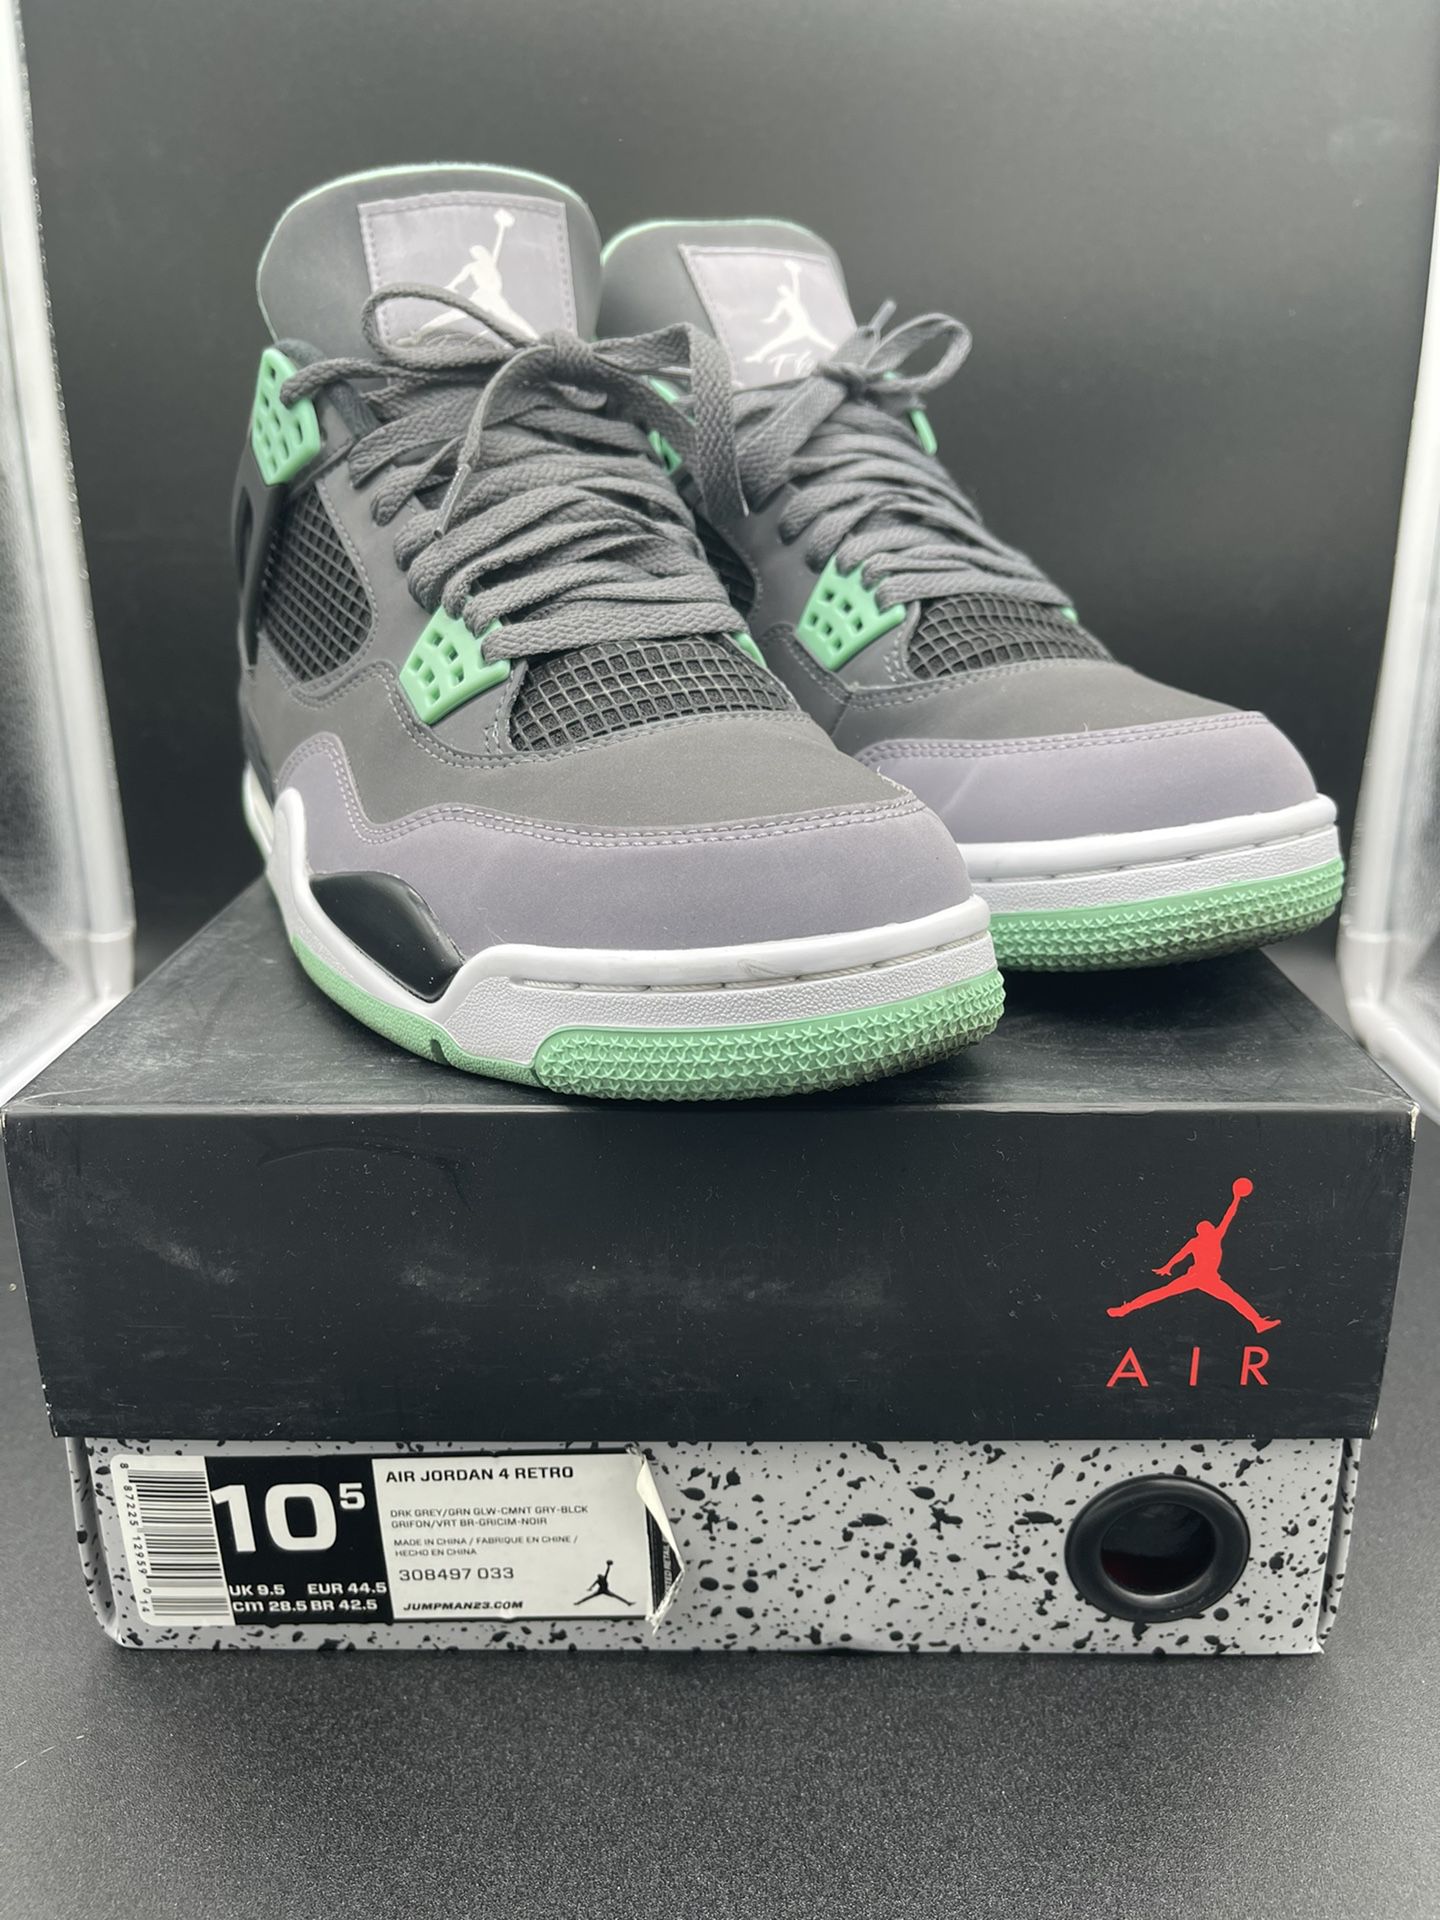 Jordan 4 Retro “Green Glow”    Size 10.5